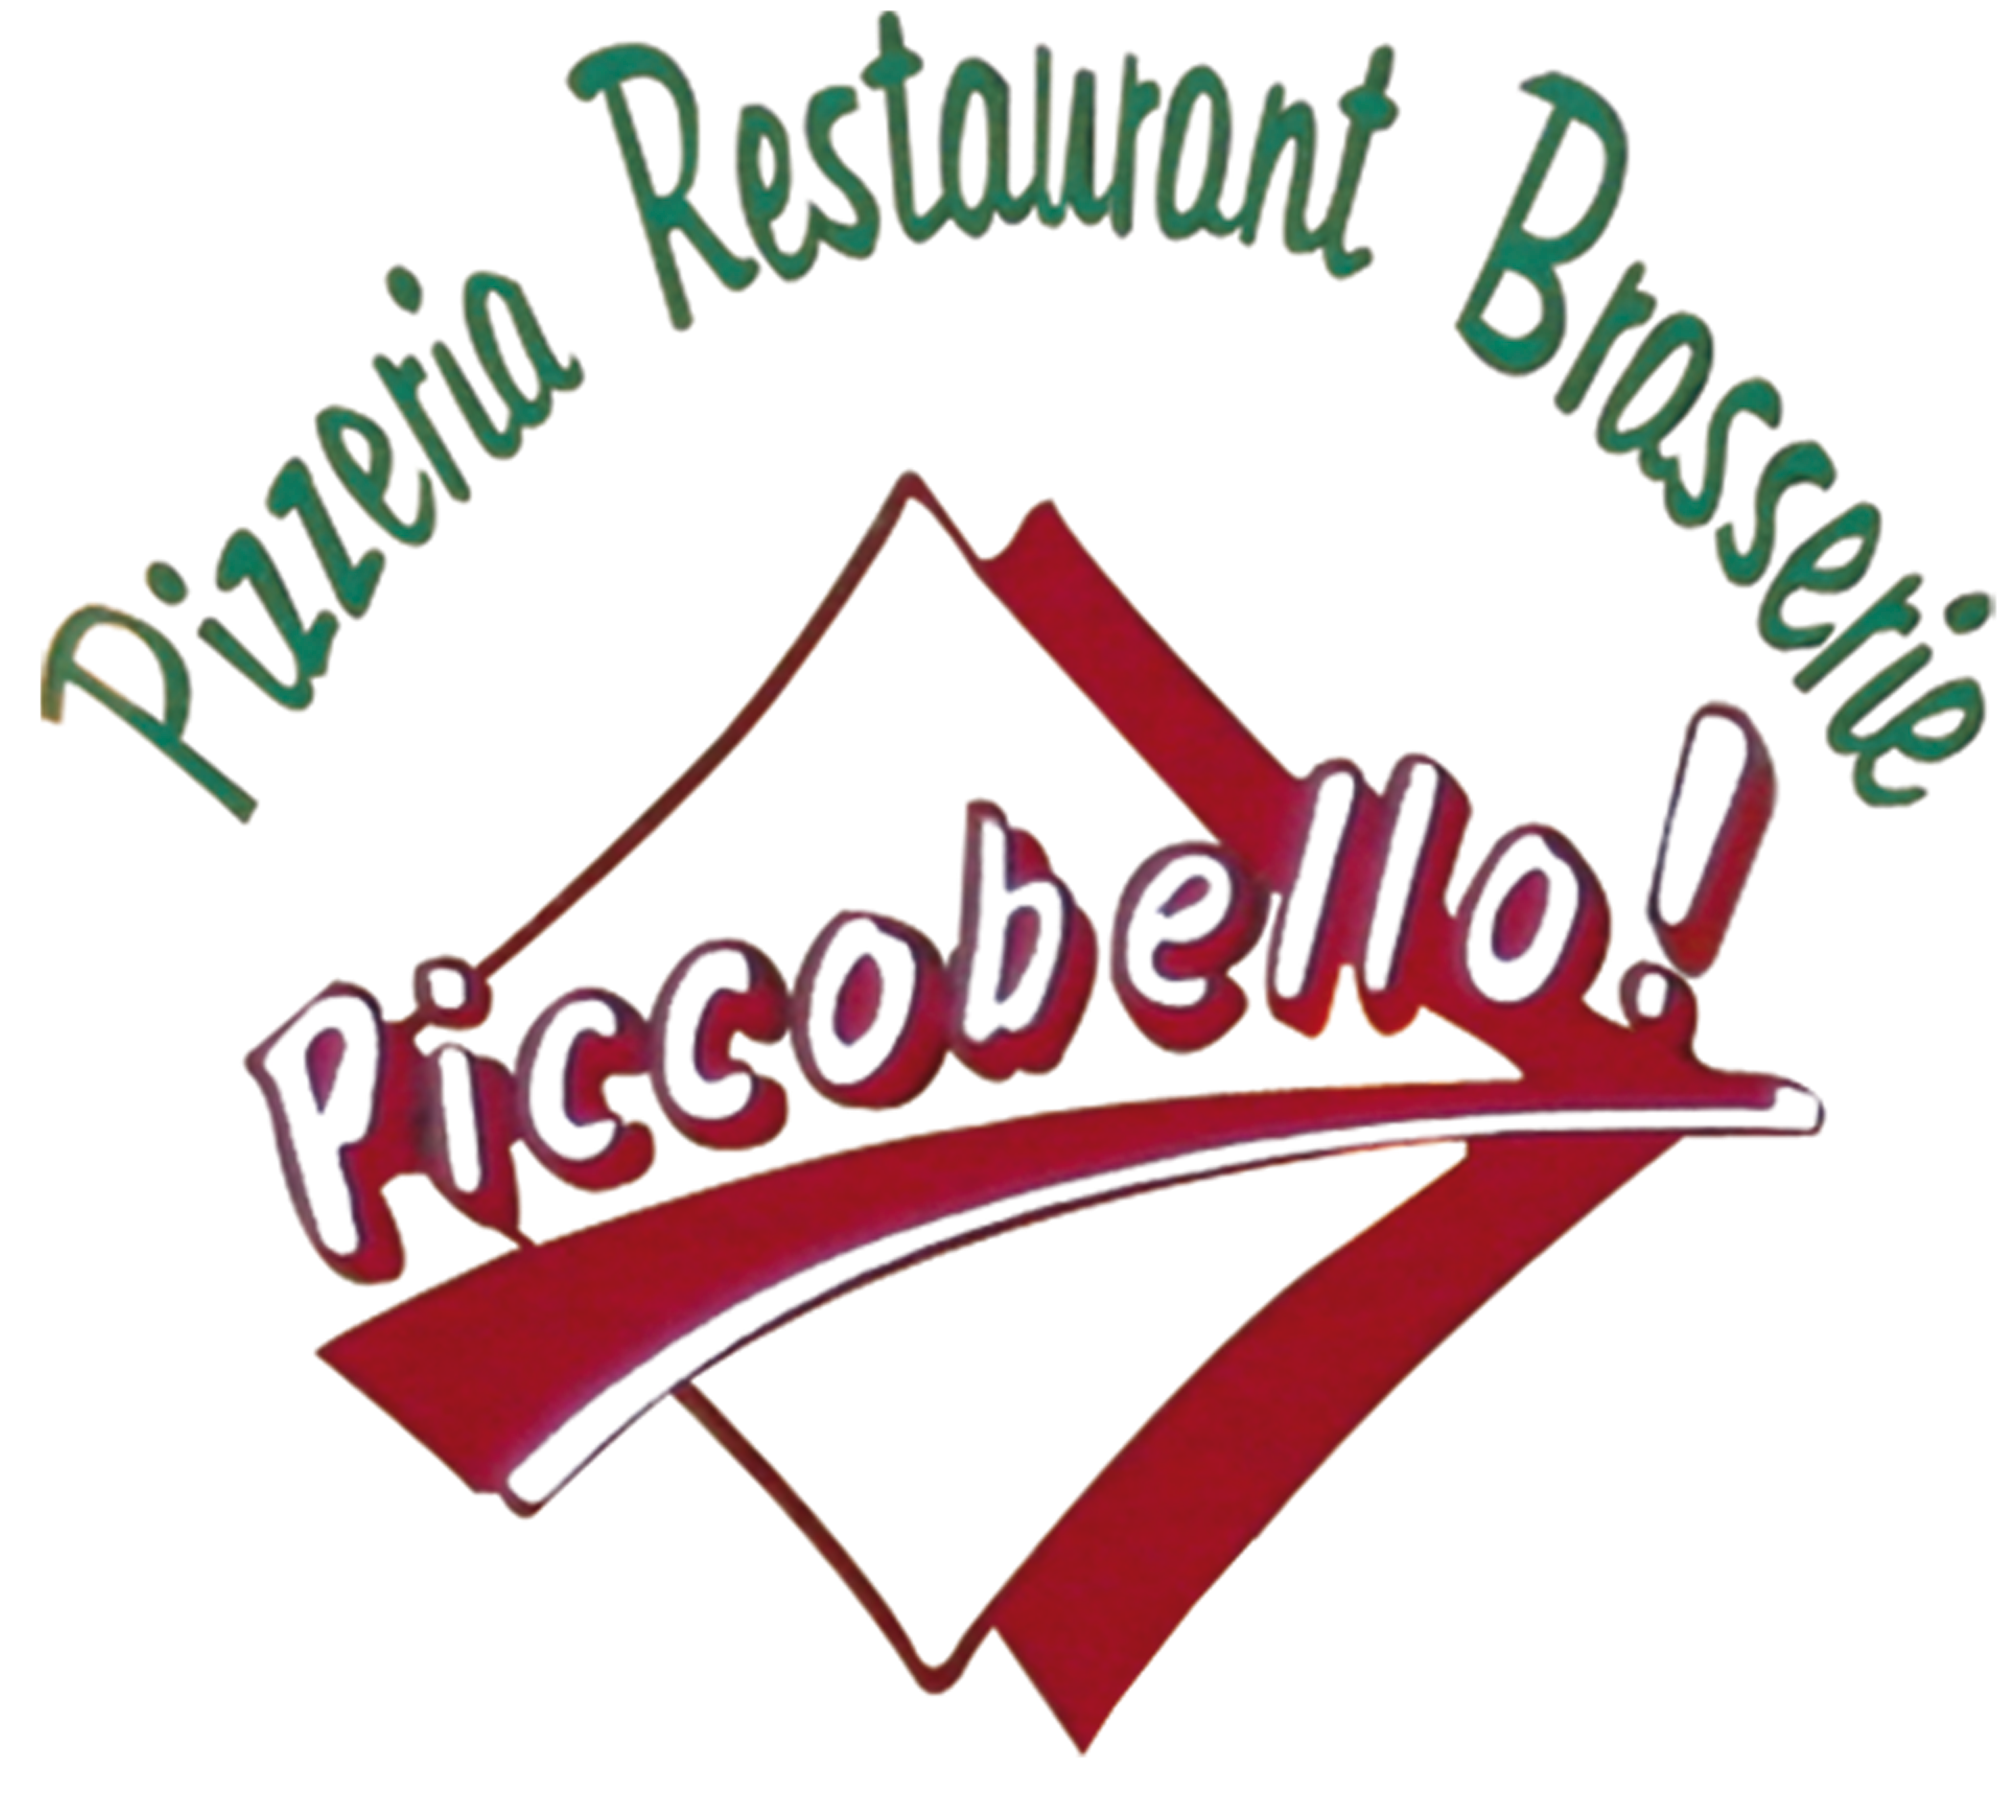 Restaurant-Pizzeria Piccobello